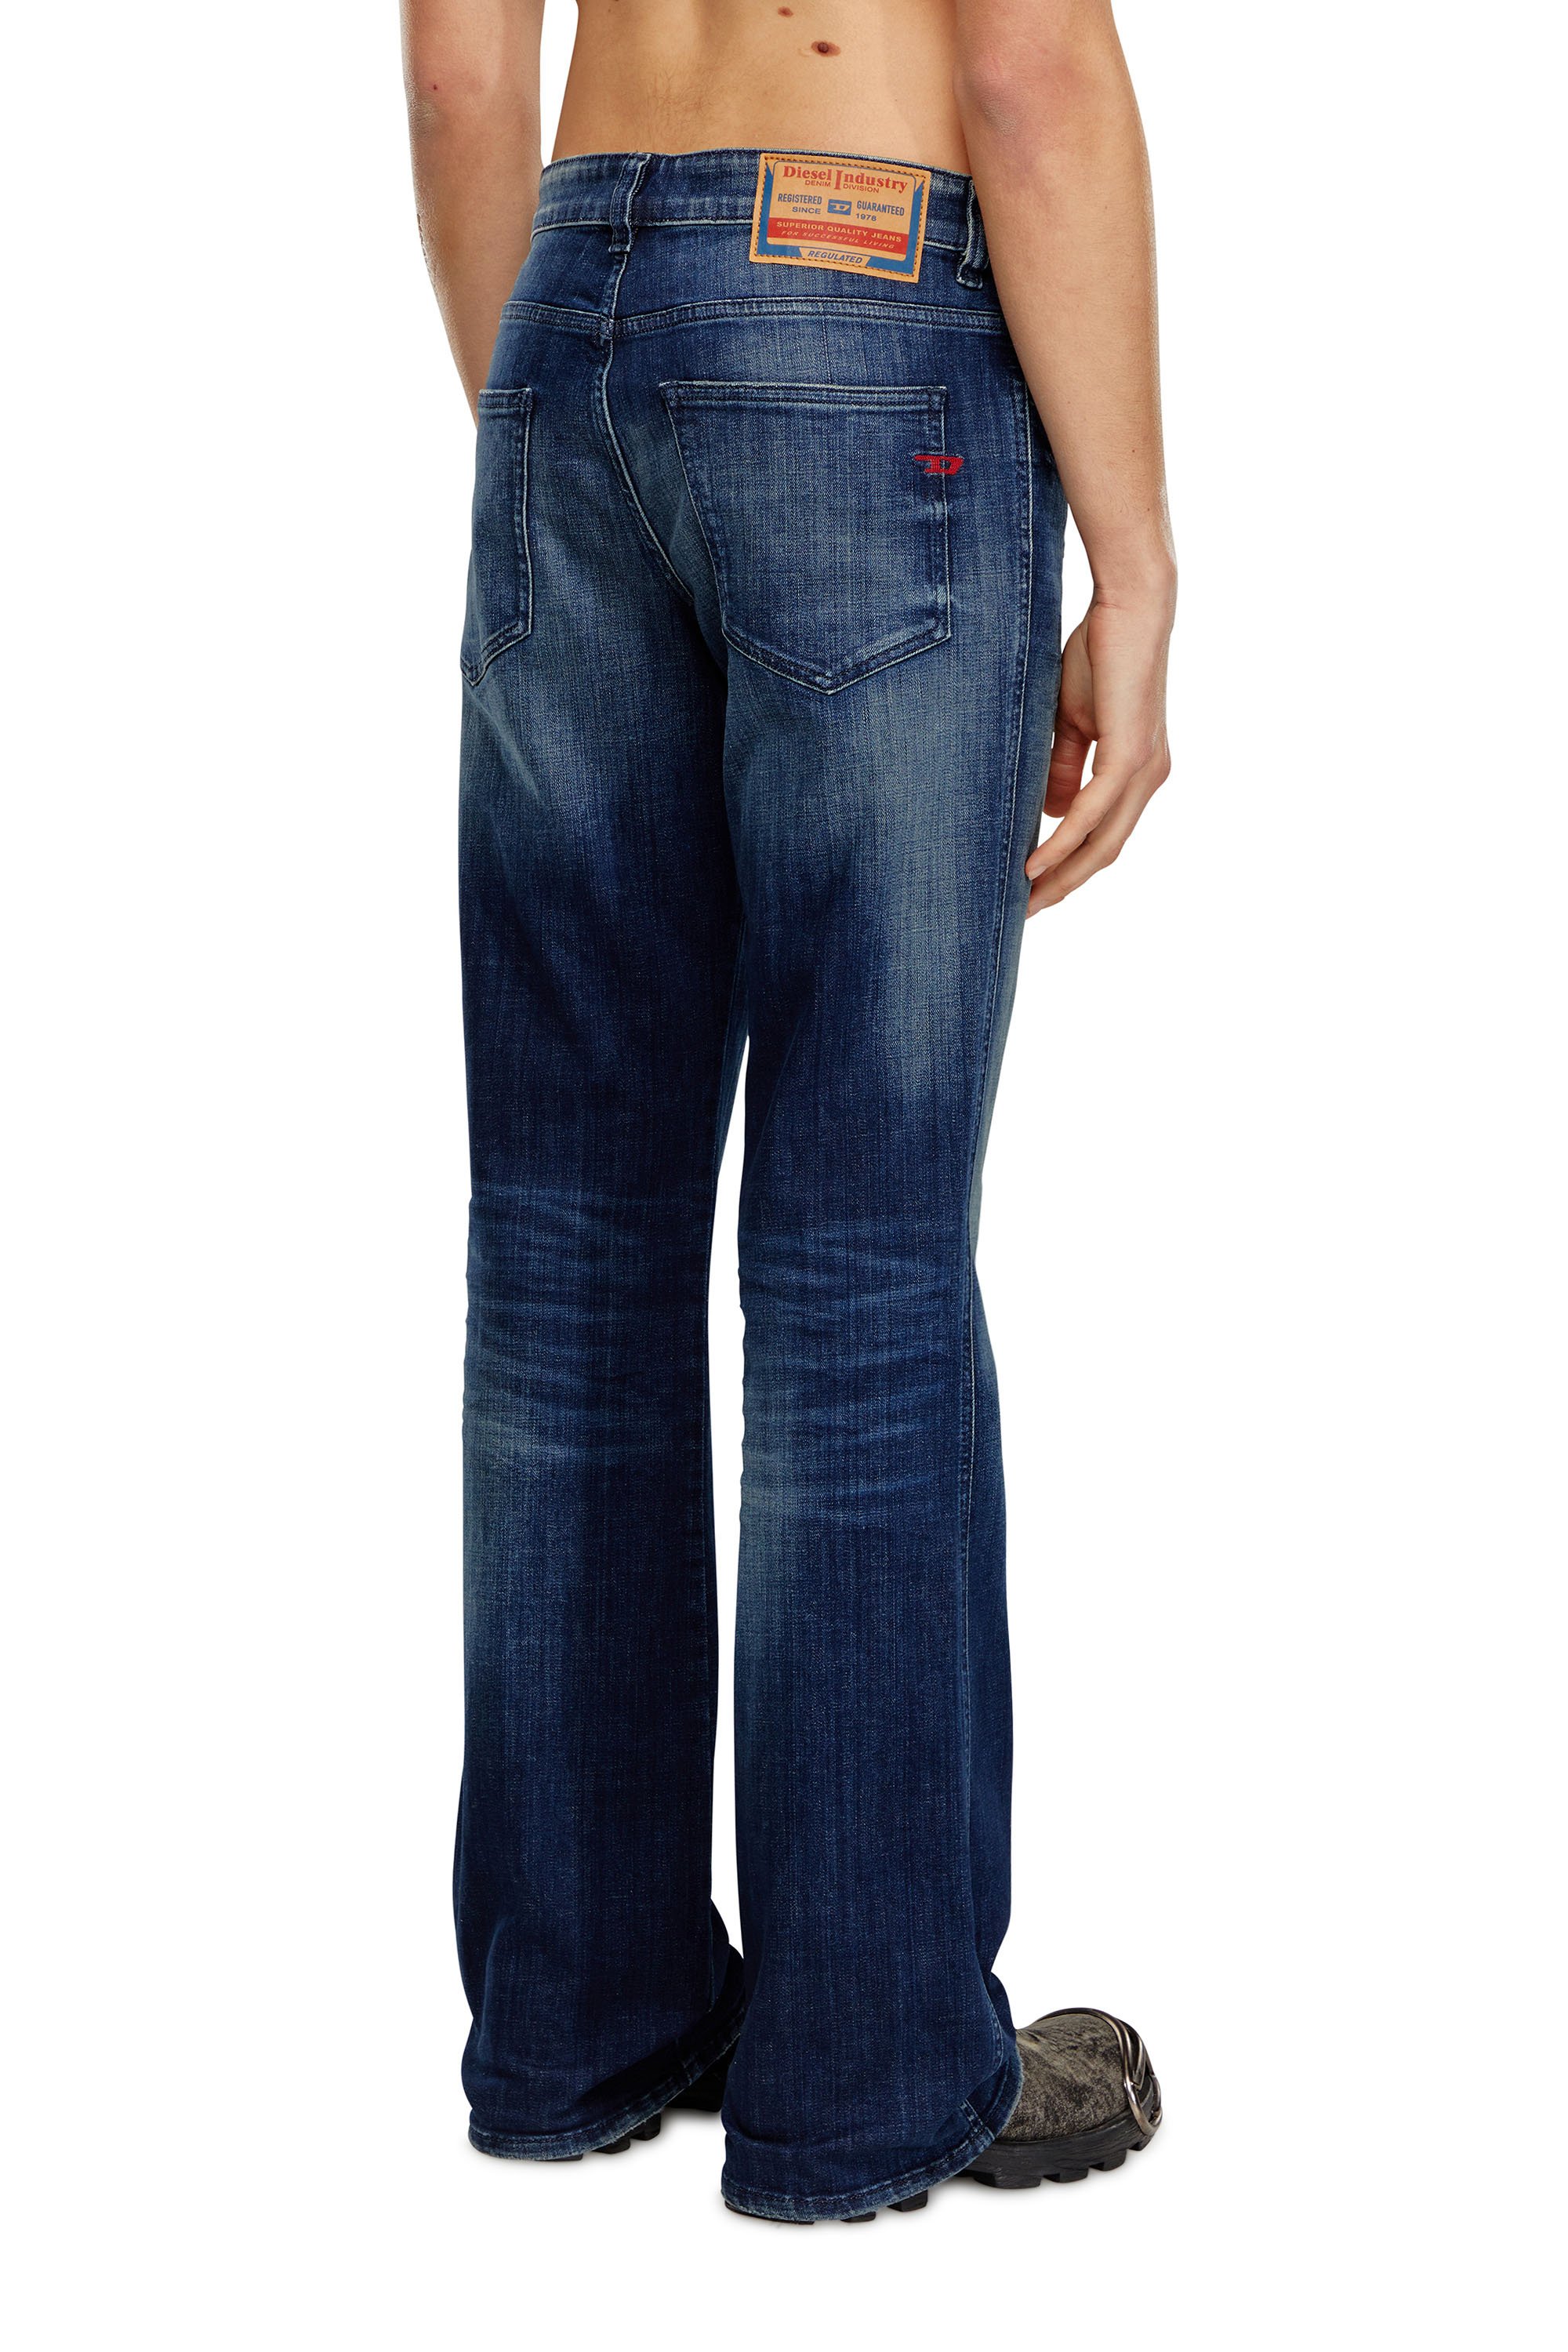 Men Bootcut Jeans - Buy Men Bootcut Jeans online in India